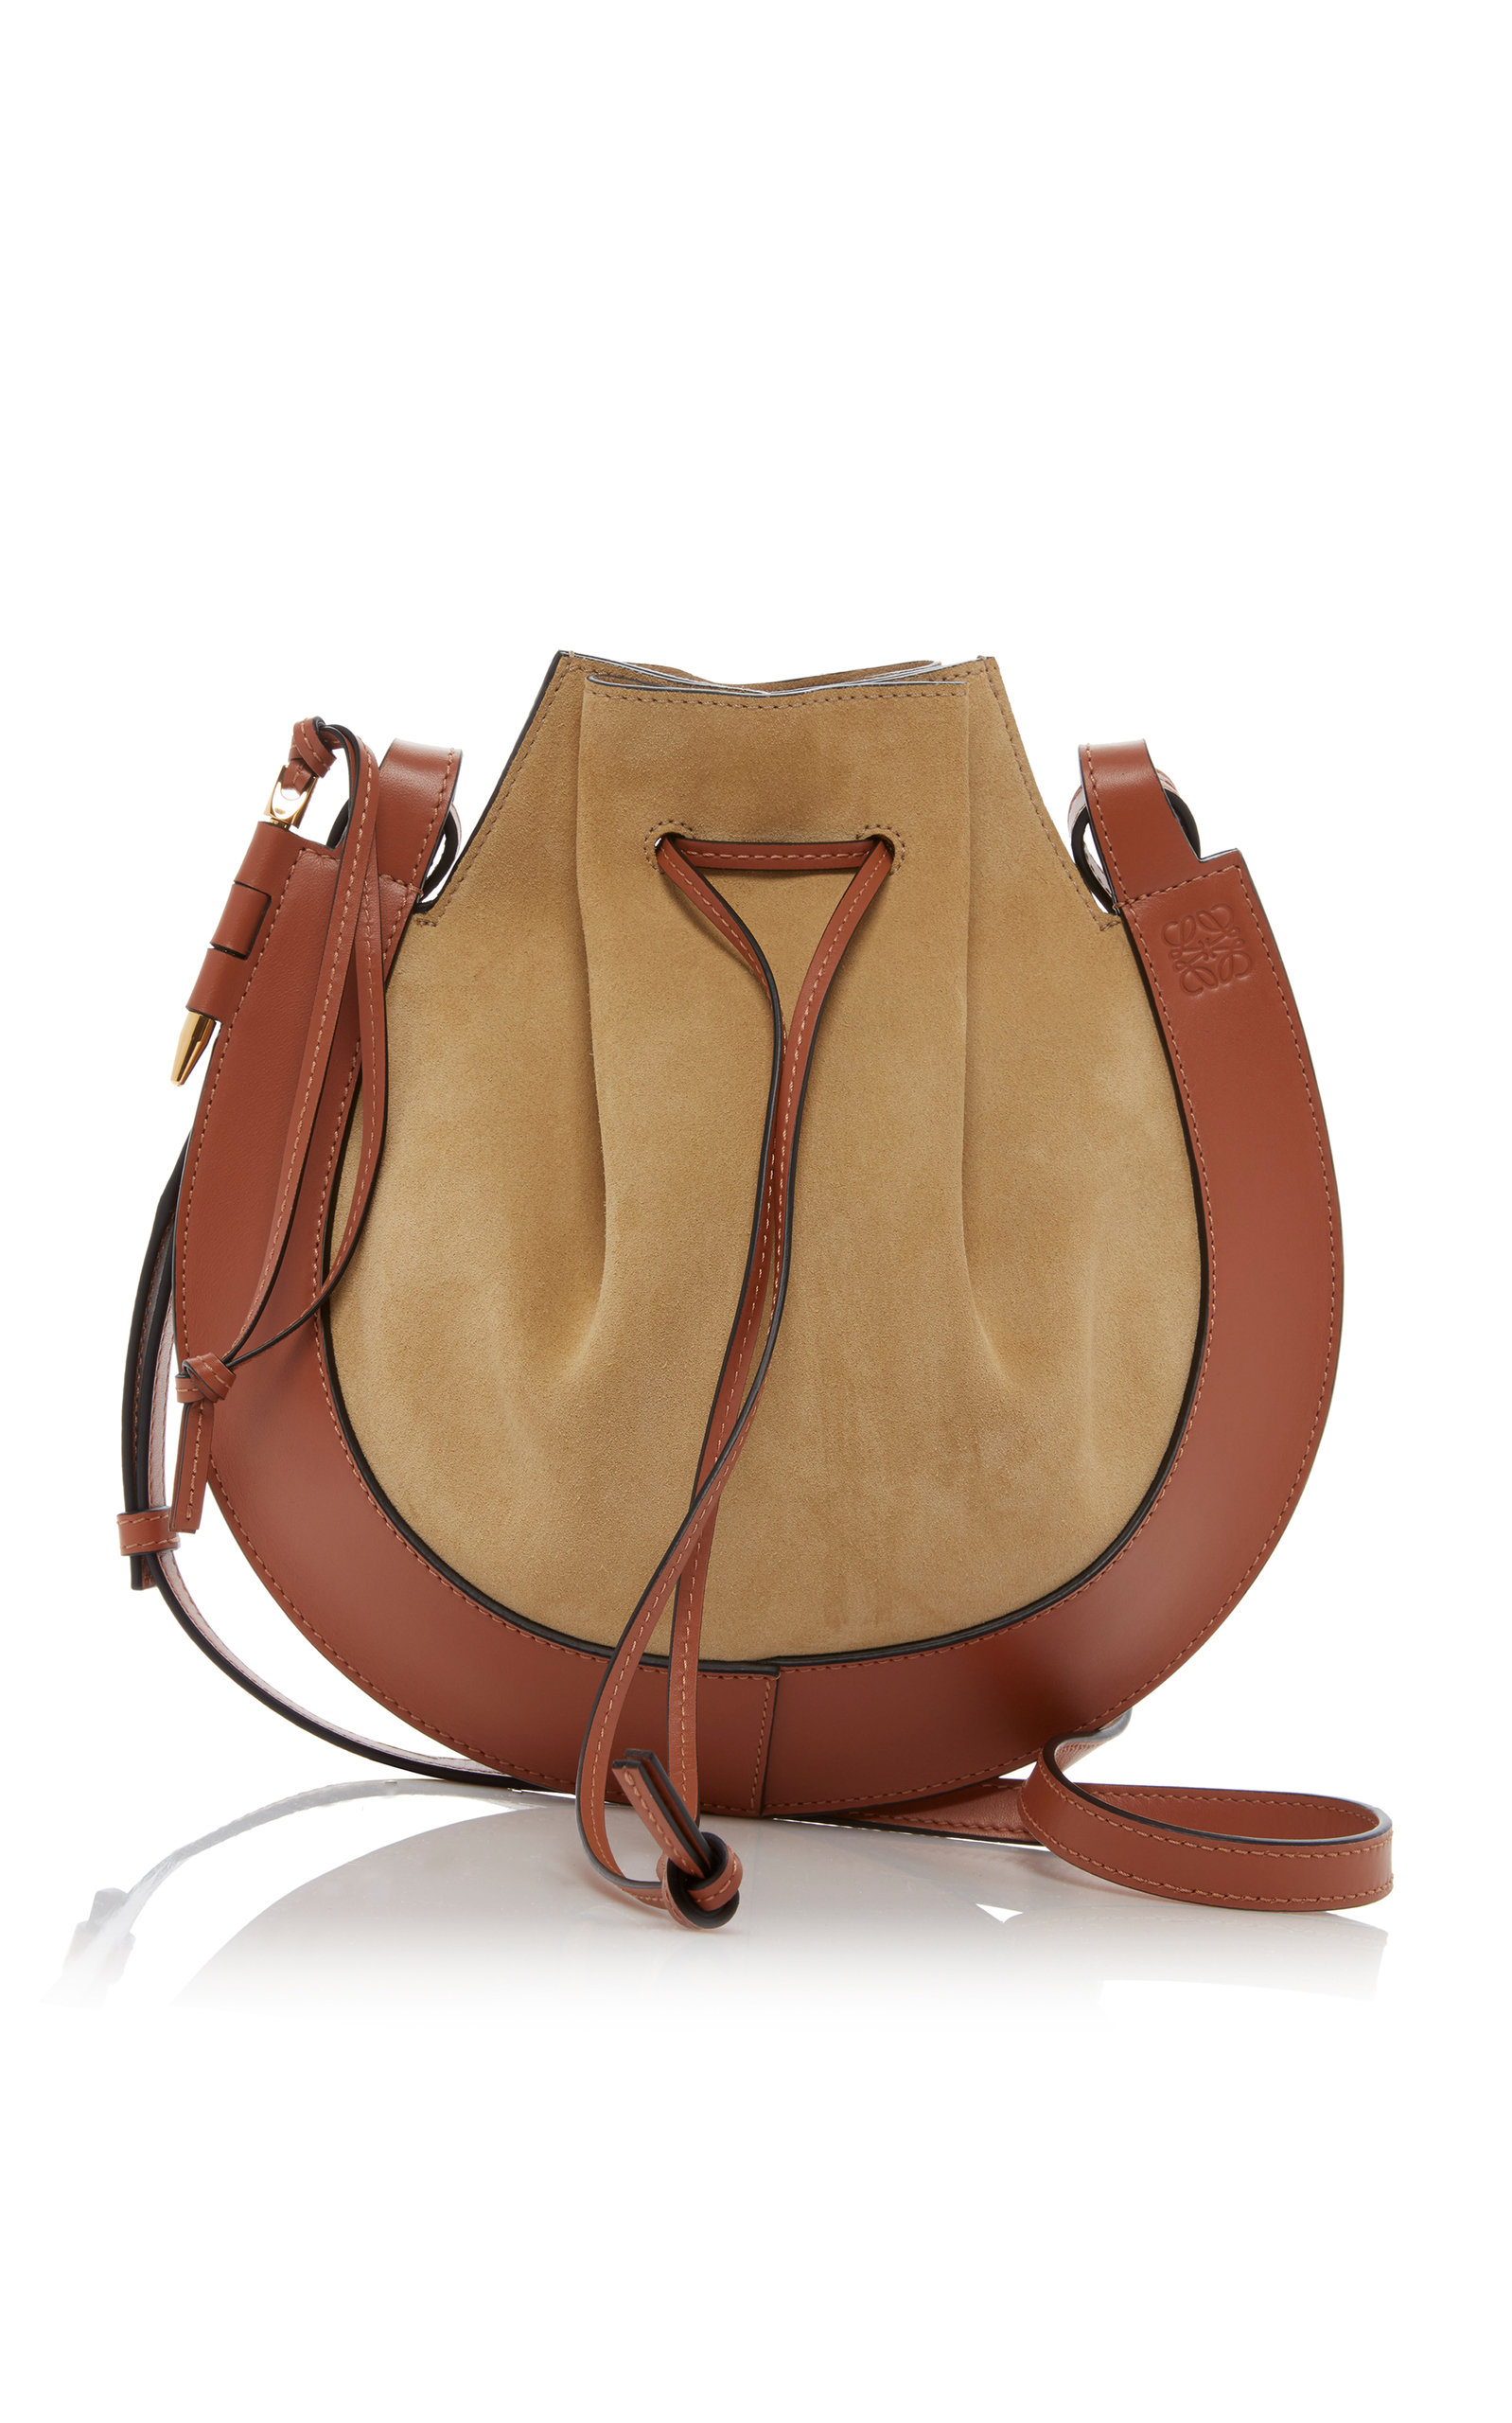 Loewe Bag From Which Country on Sale, 58% OFF | espirituviajero.com